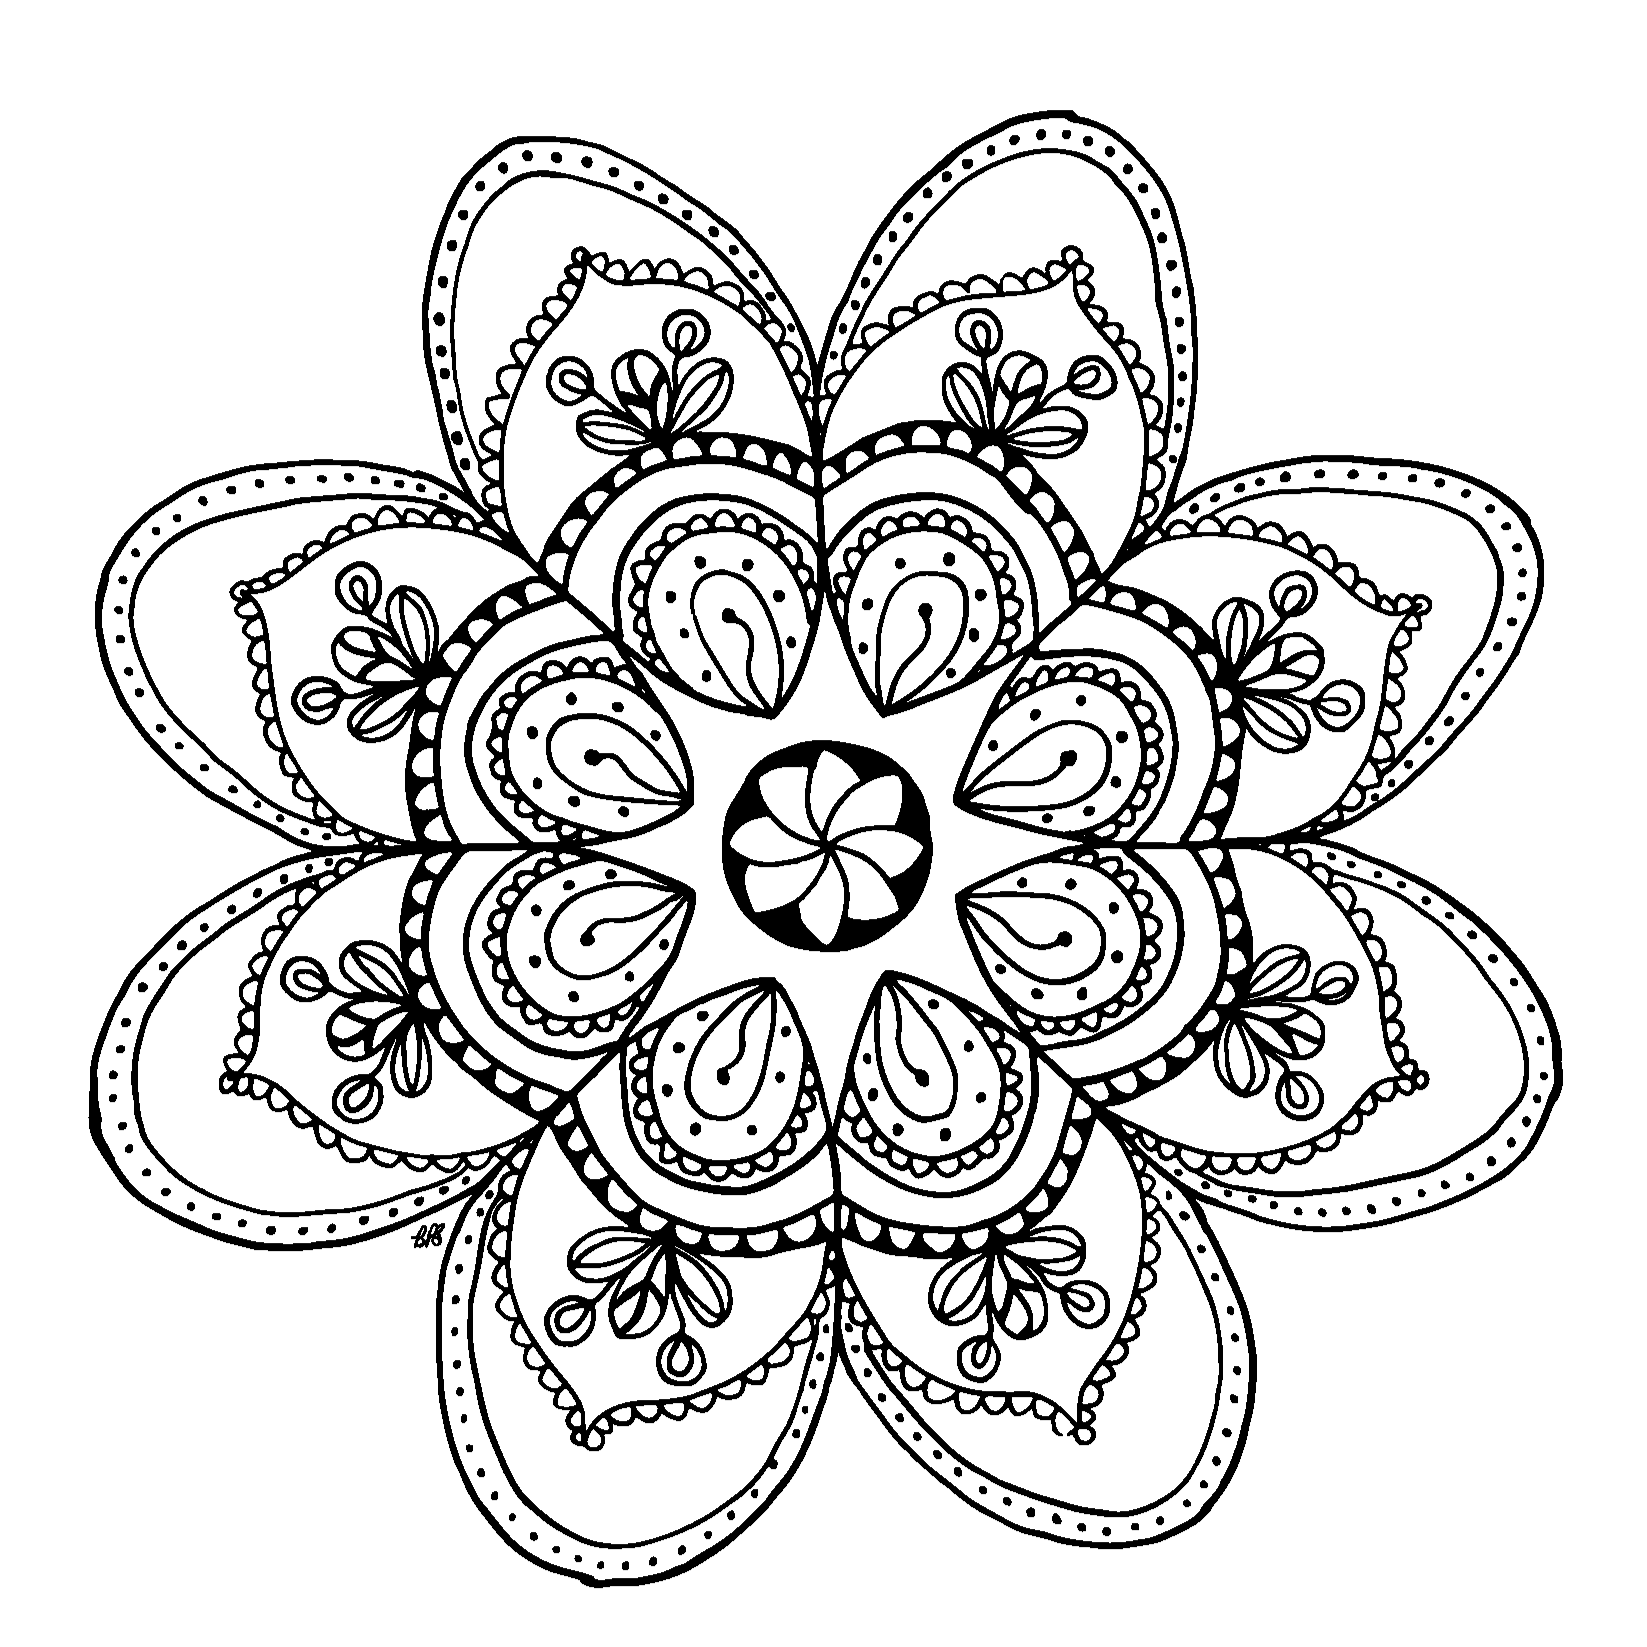 Free mandala bloom downloadable coloring page â nourish designs